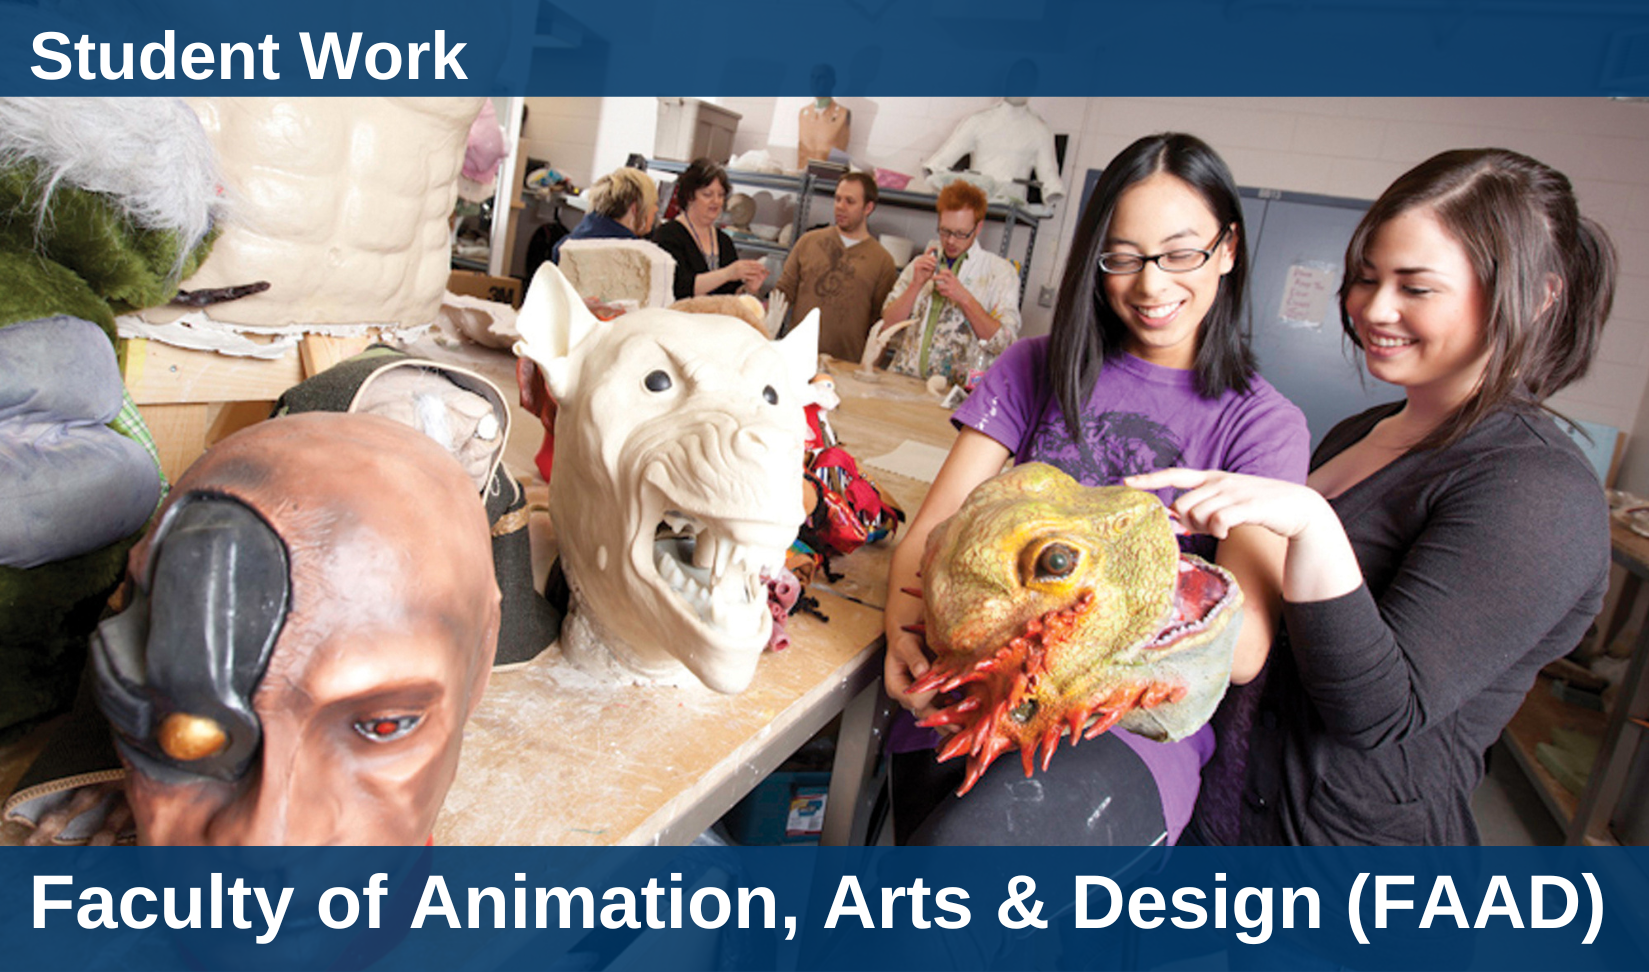 Faculty of Animation, Arts & Design (FAAD)